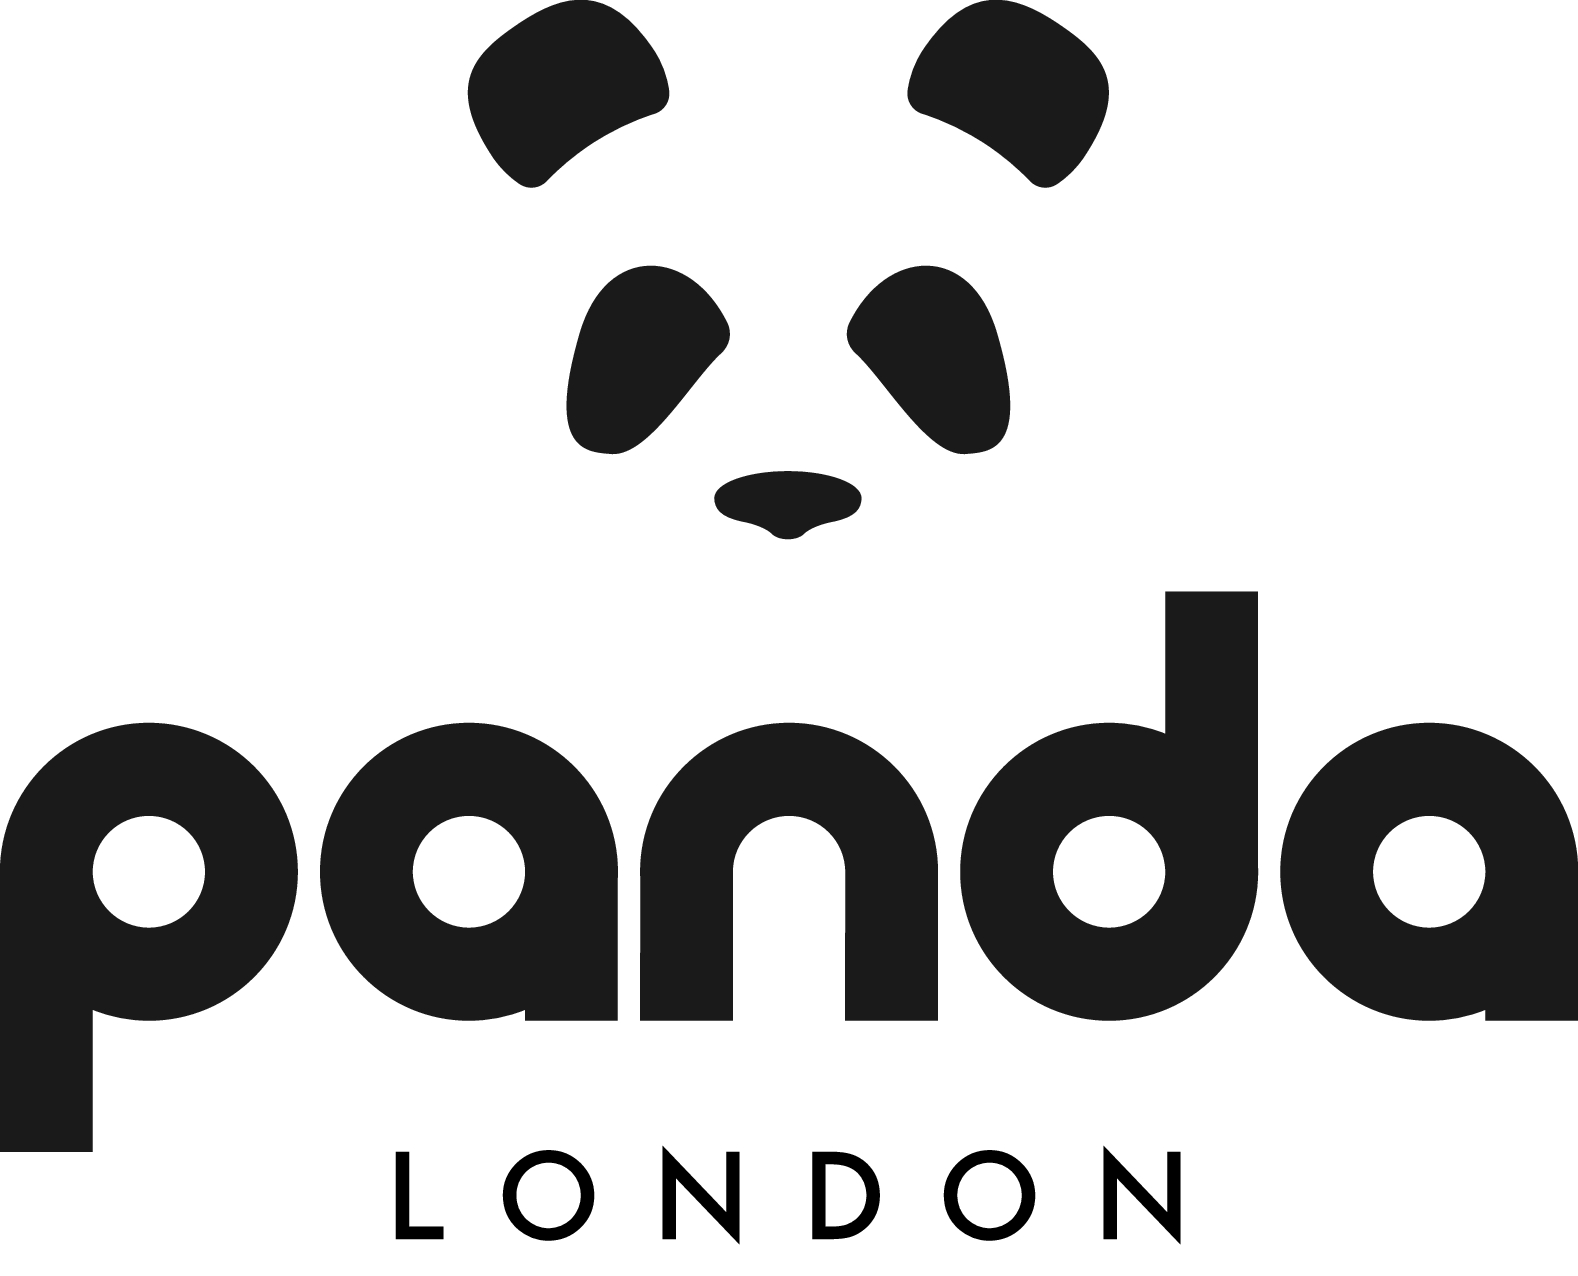 Panda London kod promocyjny 